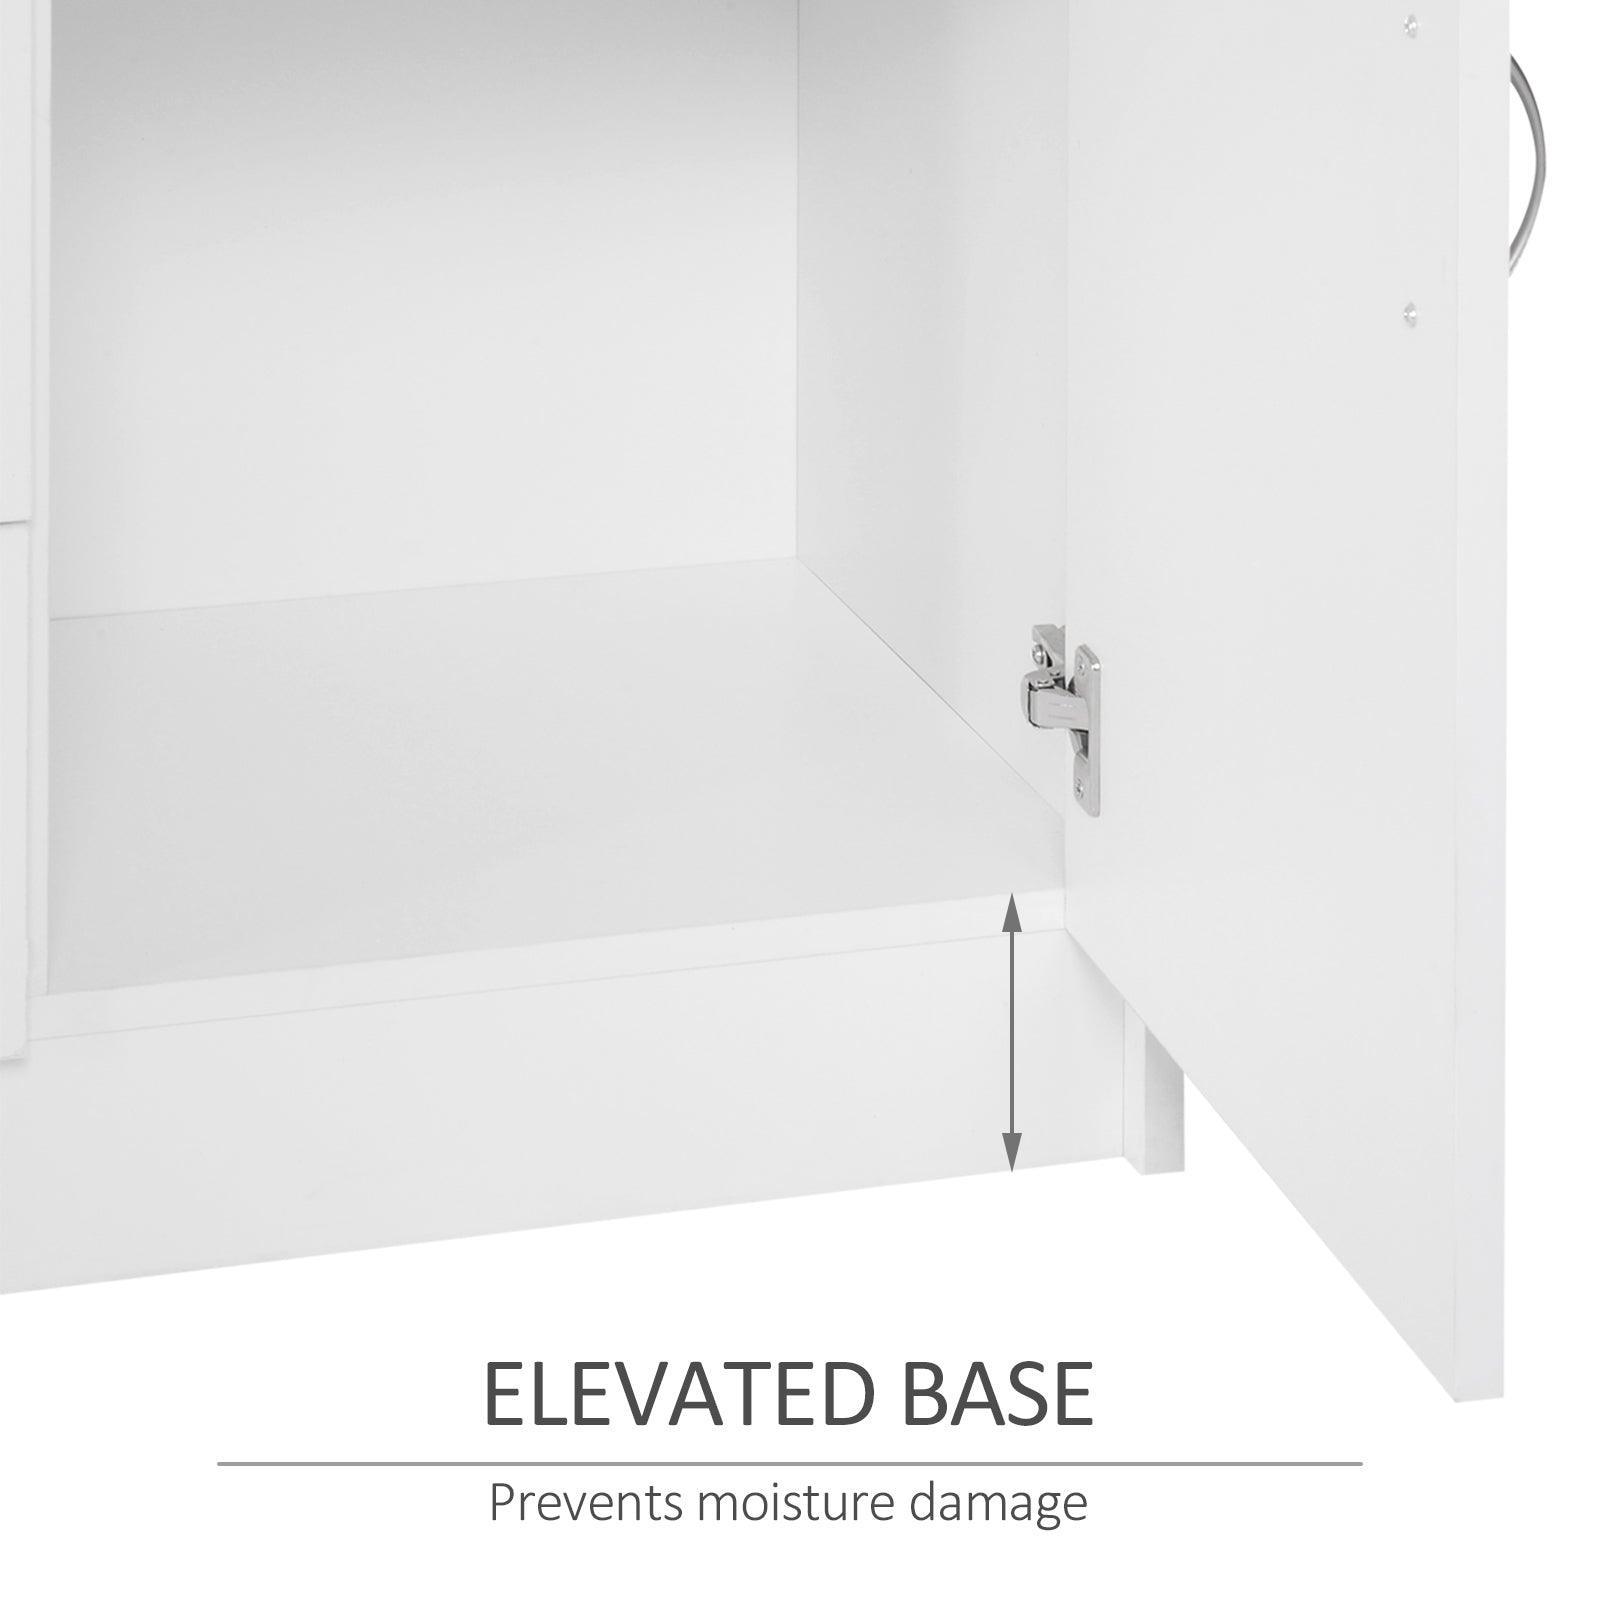 HOMCOM Storage Cabinet: White, 2 Doors + 4 Drawers - ALL4U RETAILER LTD